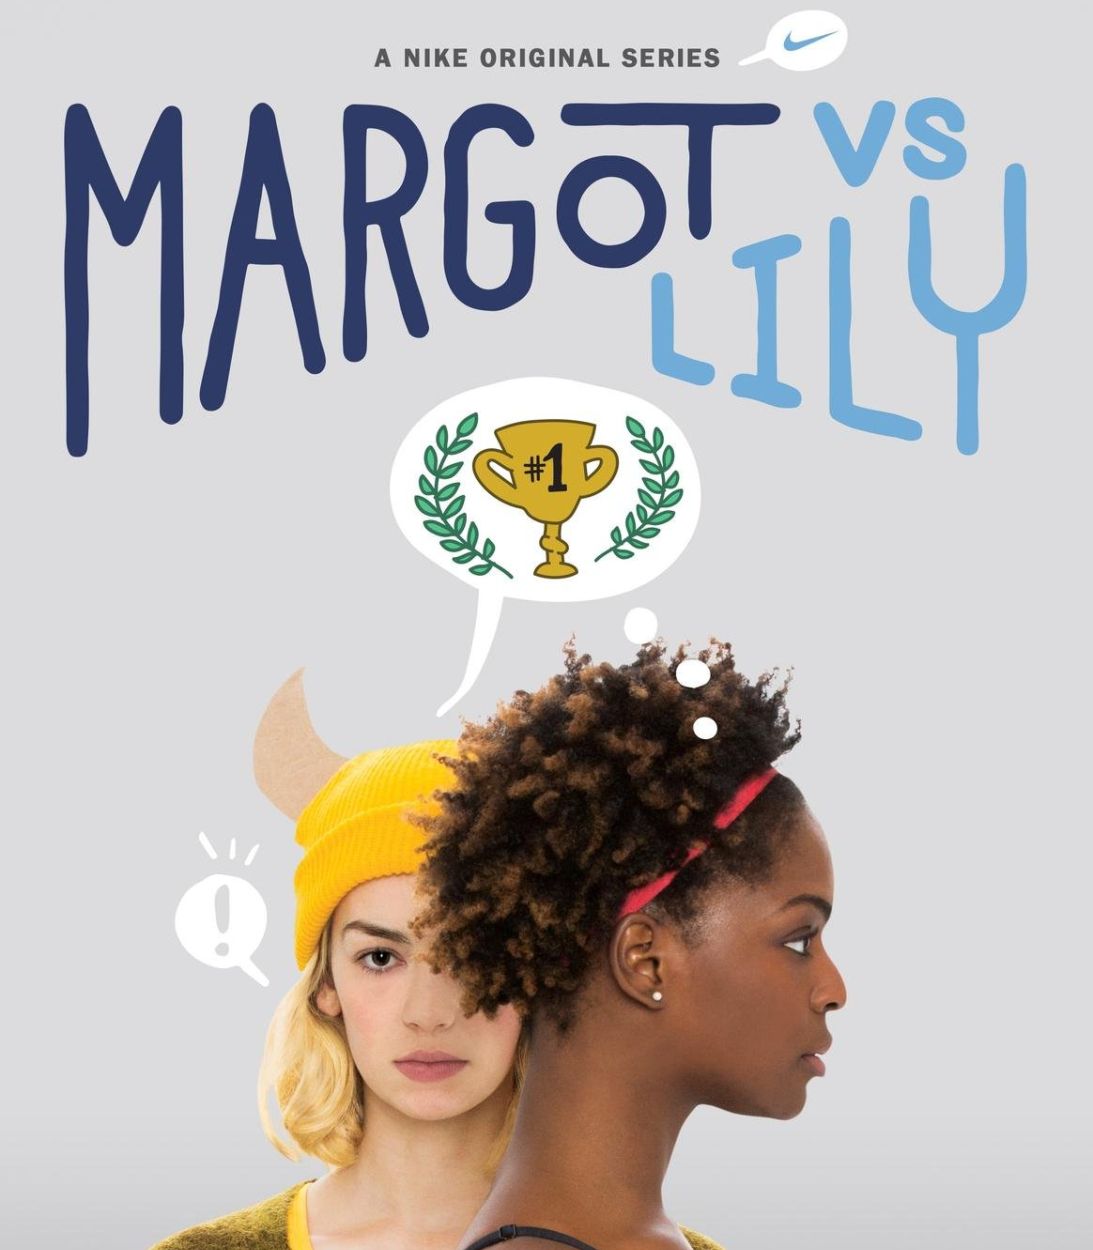 margot vs lily poster vertical